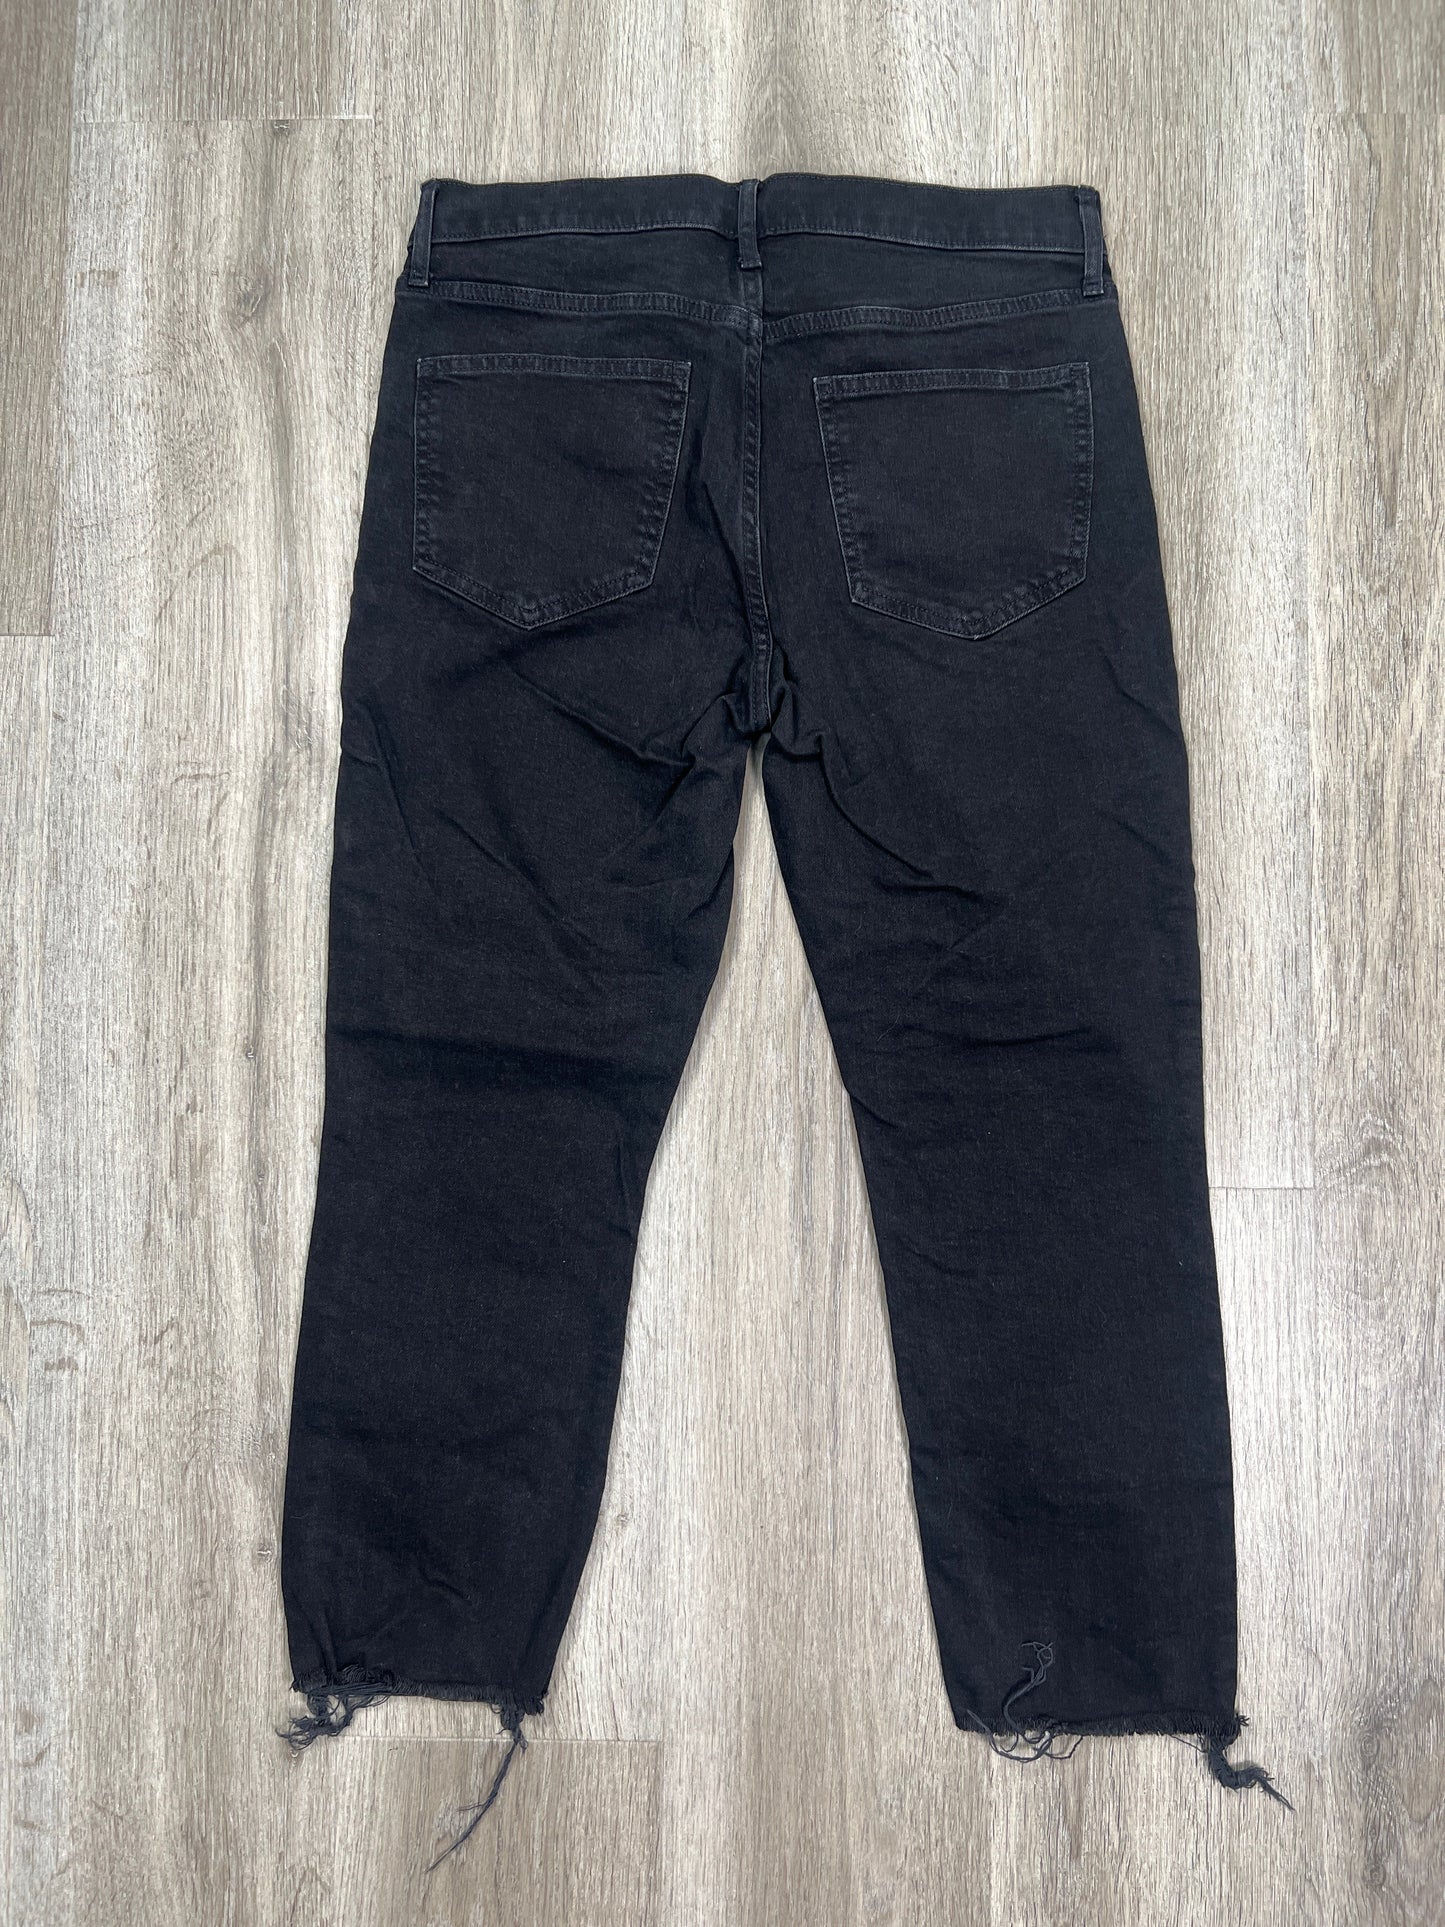 Black Jeans Cropped Gap, Size 8petite